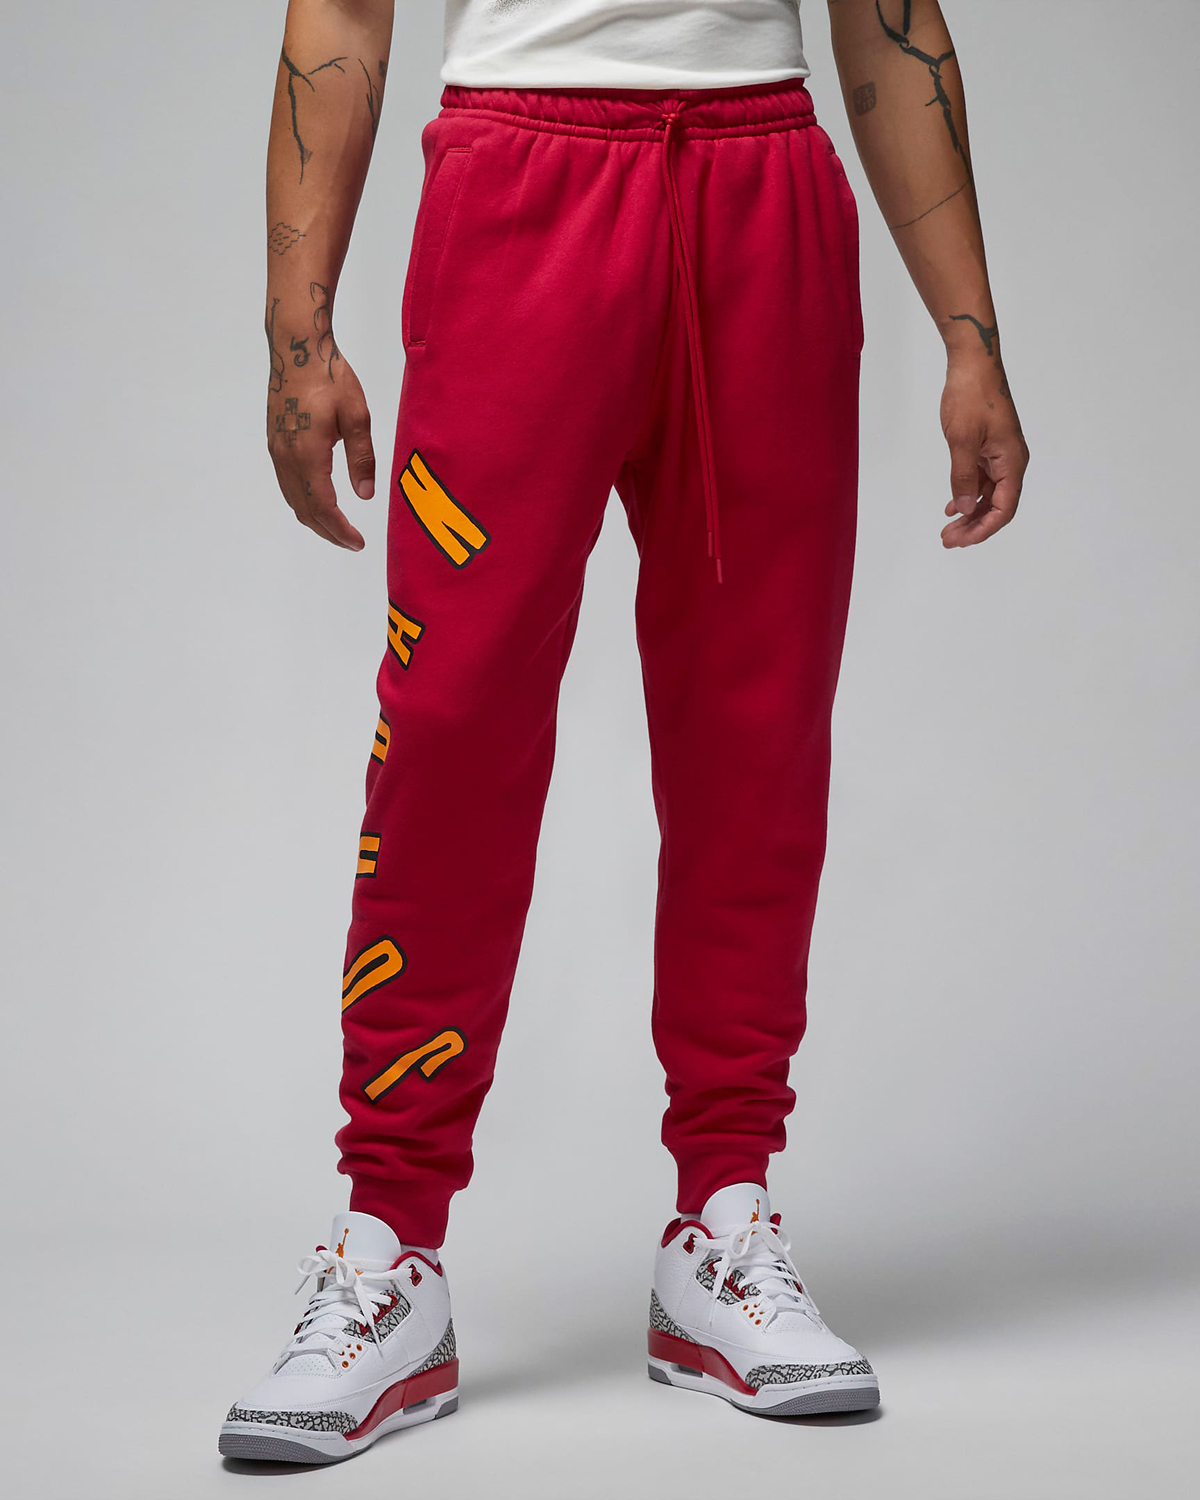 Jordan Cardinal Red Shirts Shorts Hoodies Pants Outfits